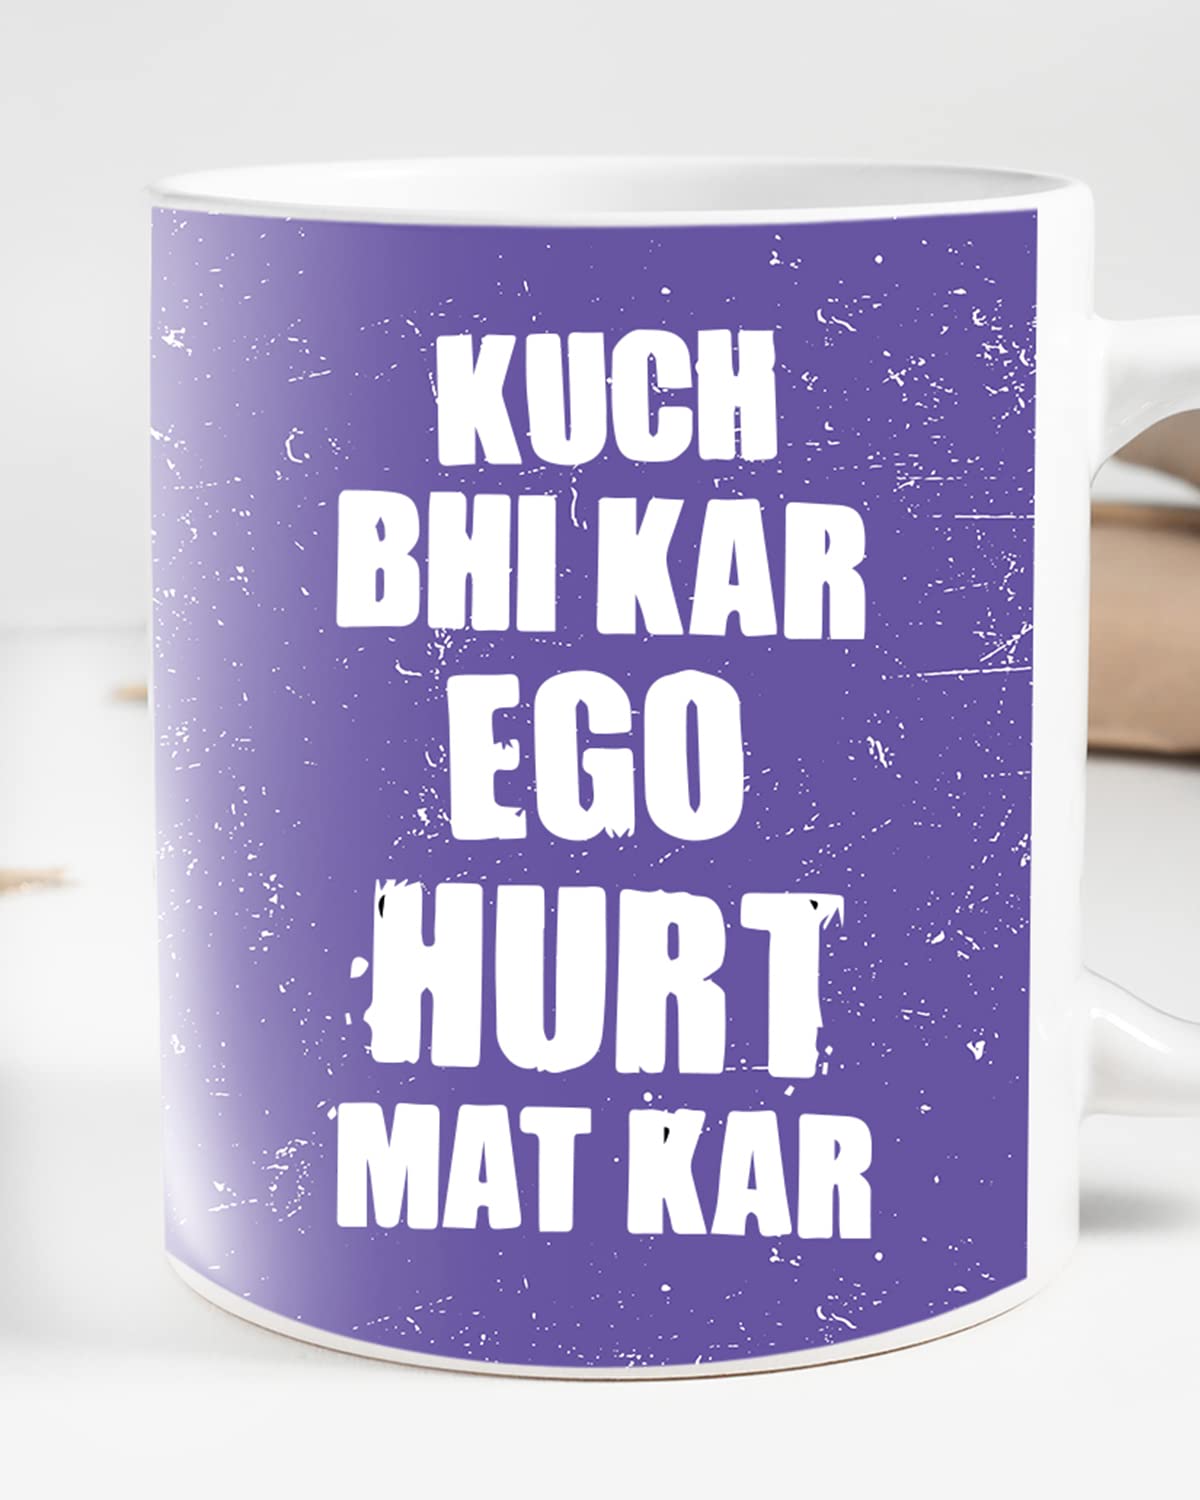 Kuch bhi kar ego mat Hurt kar Coffee Mug - Gift for Friend, Birthday Gift, Birthday Mug, Motivational Quotes Mug, Mugs with Funny & Funky Dialogues, Bollywood Mugs, Funny Mugs for Him & Her